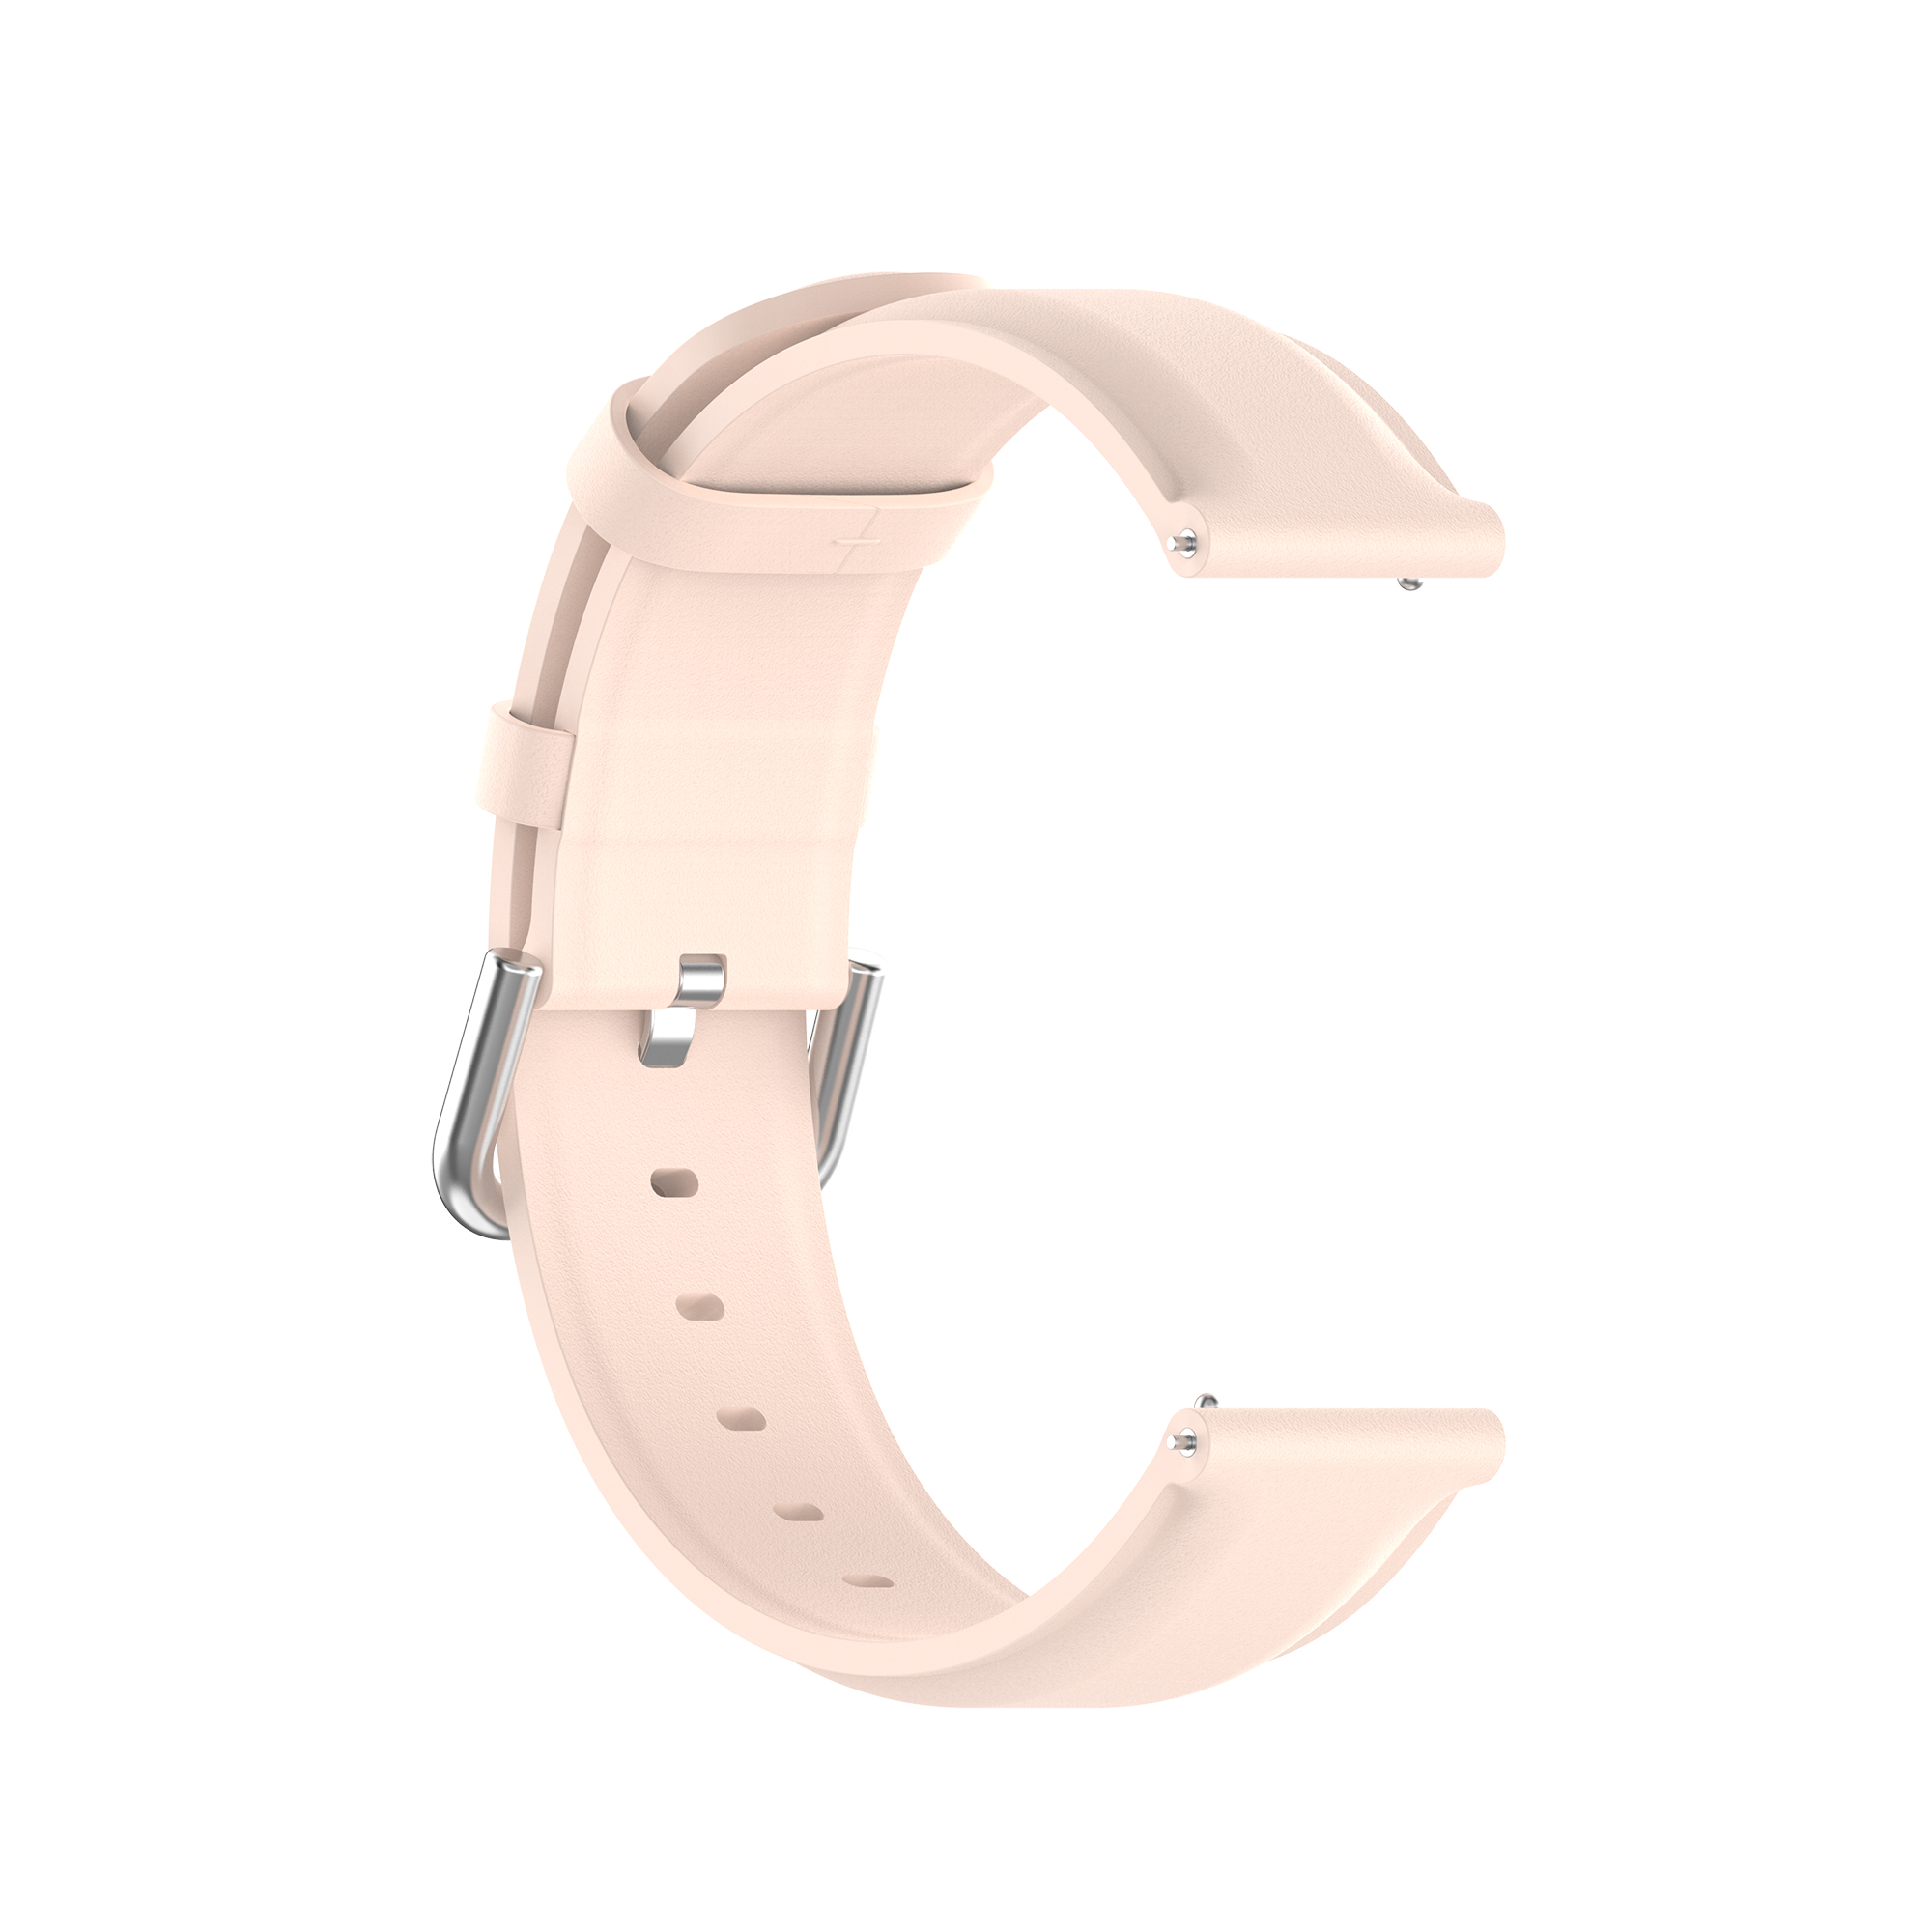 22mm-Universal-Watch-Band-Round-Tail-Leather-Watch-Strap-for-Huawei-Watch-GT2-Pro-Zeblaze-GTS-BW-HL3-1765660-26